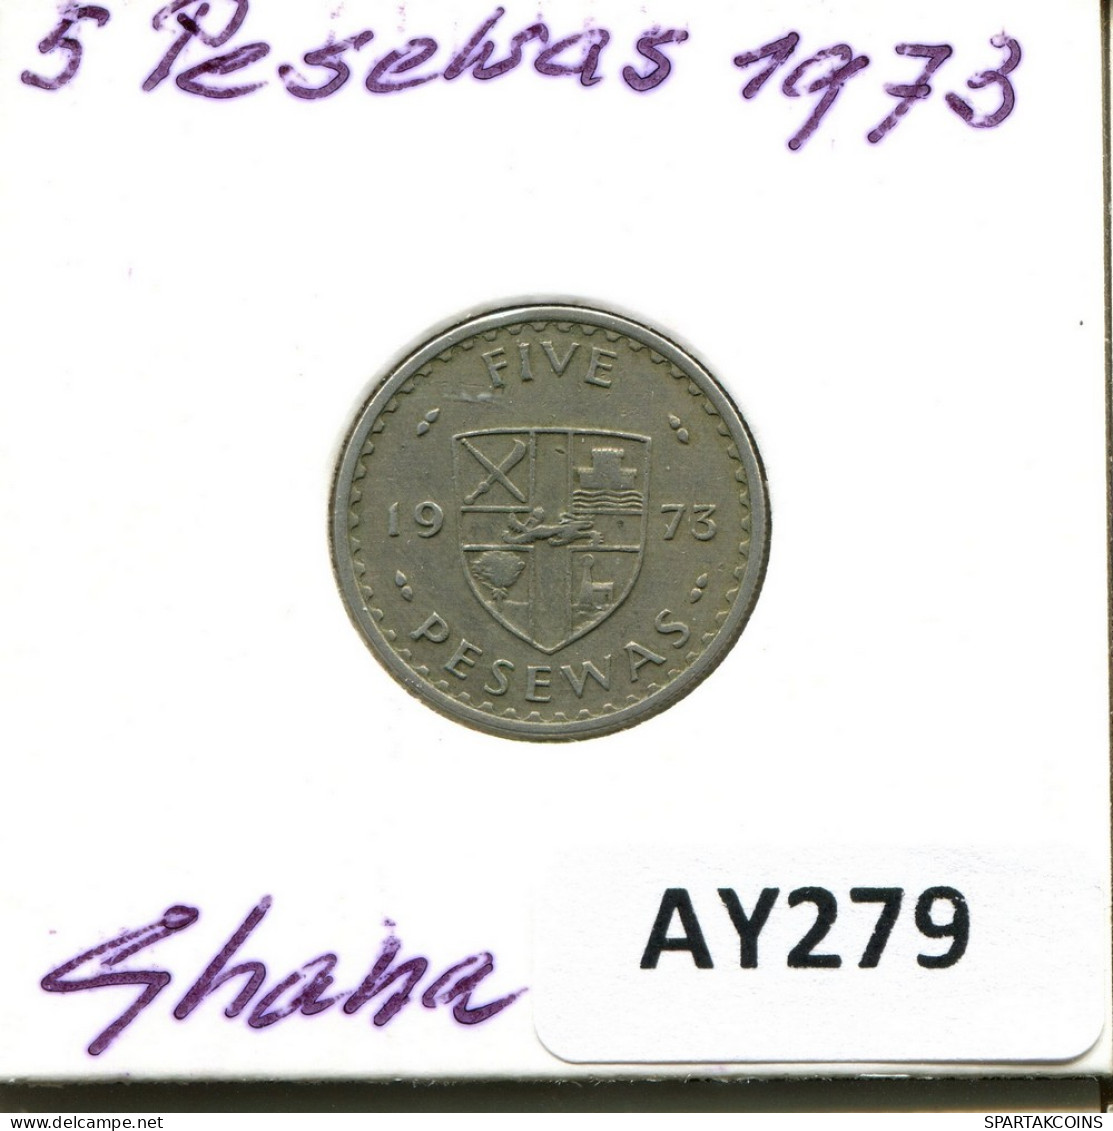 5 PESEWAS 1973 GHANA Coin #AY279.U - Ghana